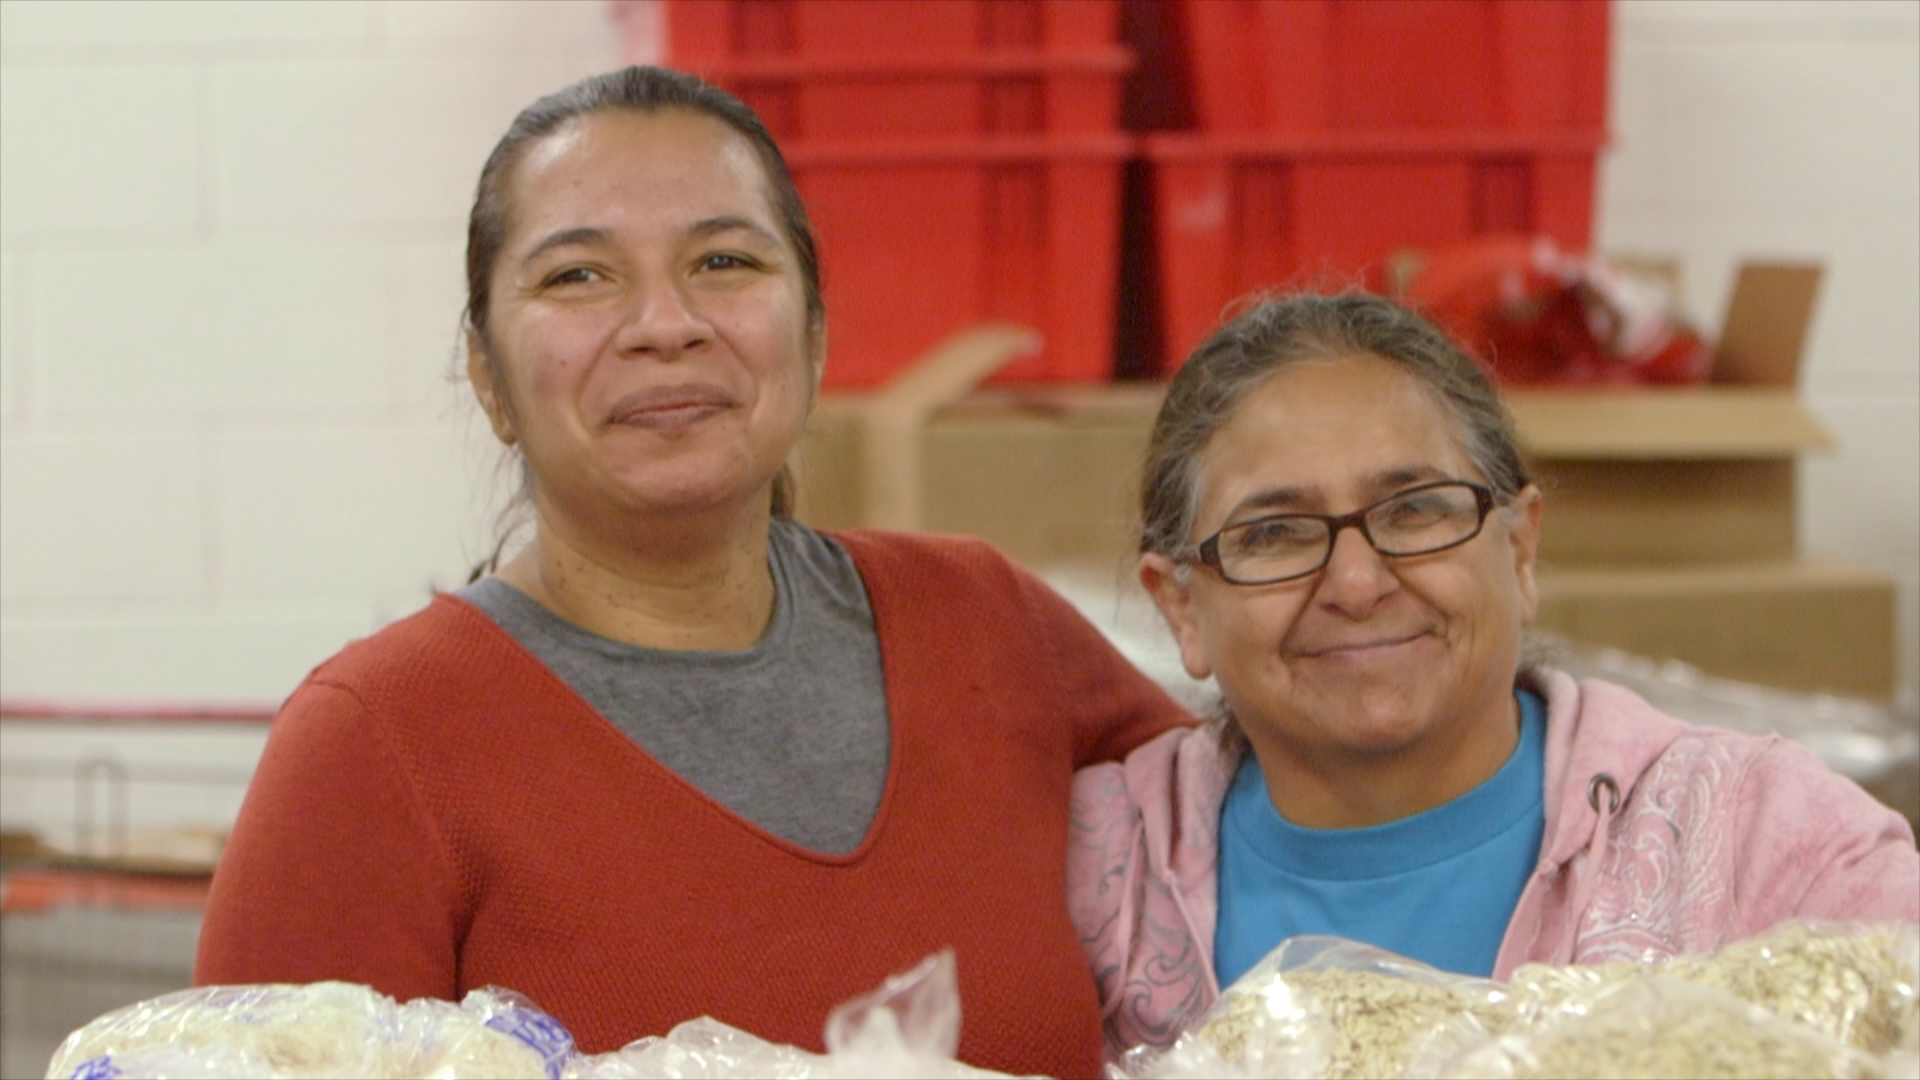 Volunteers at Toppenish Food Bank